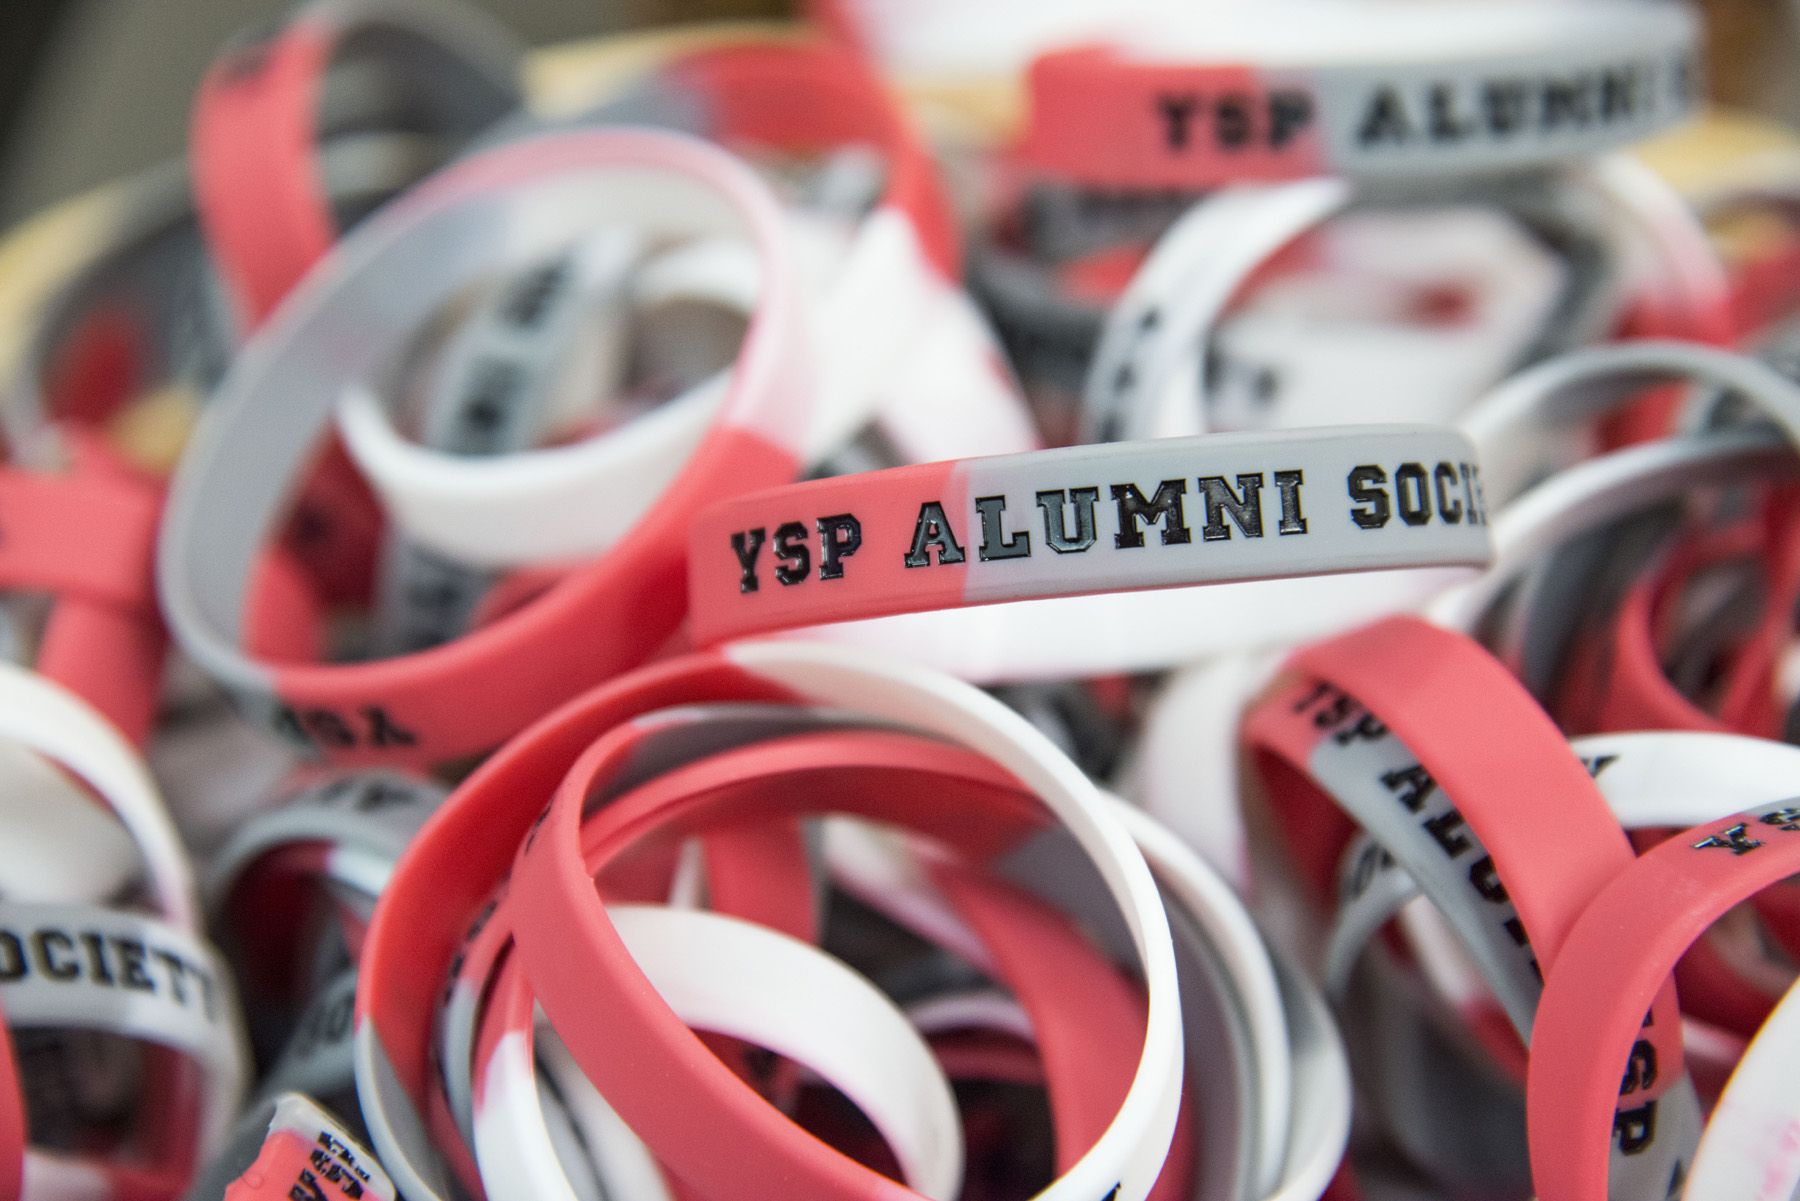 YSP Alumni Society rubber bracelets in white, scarlet and grey